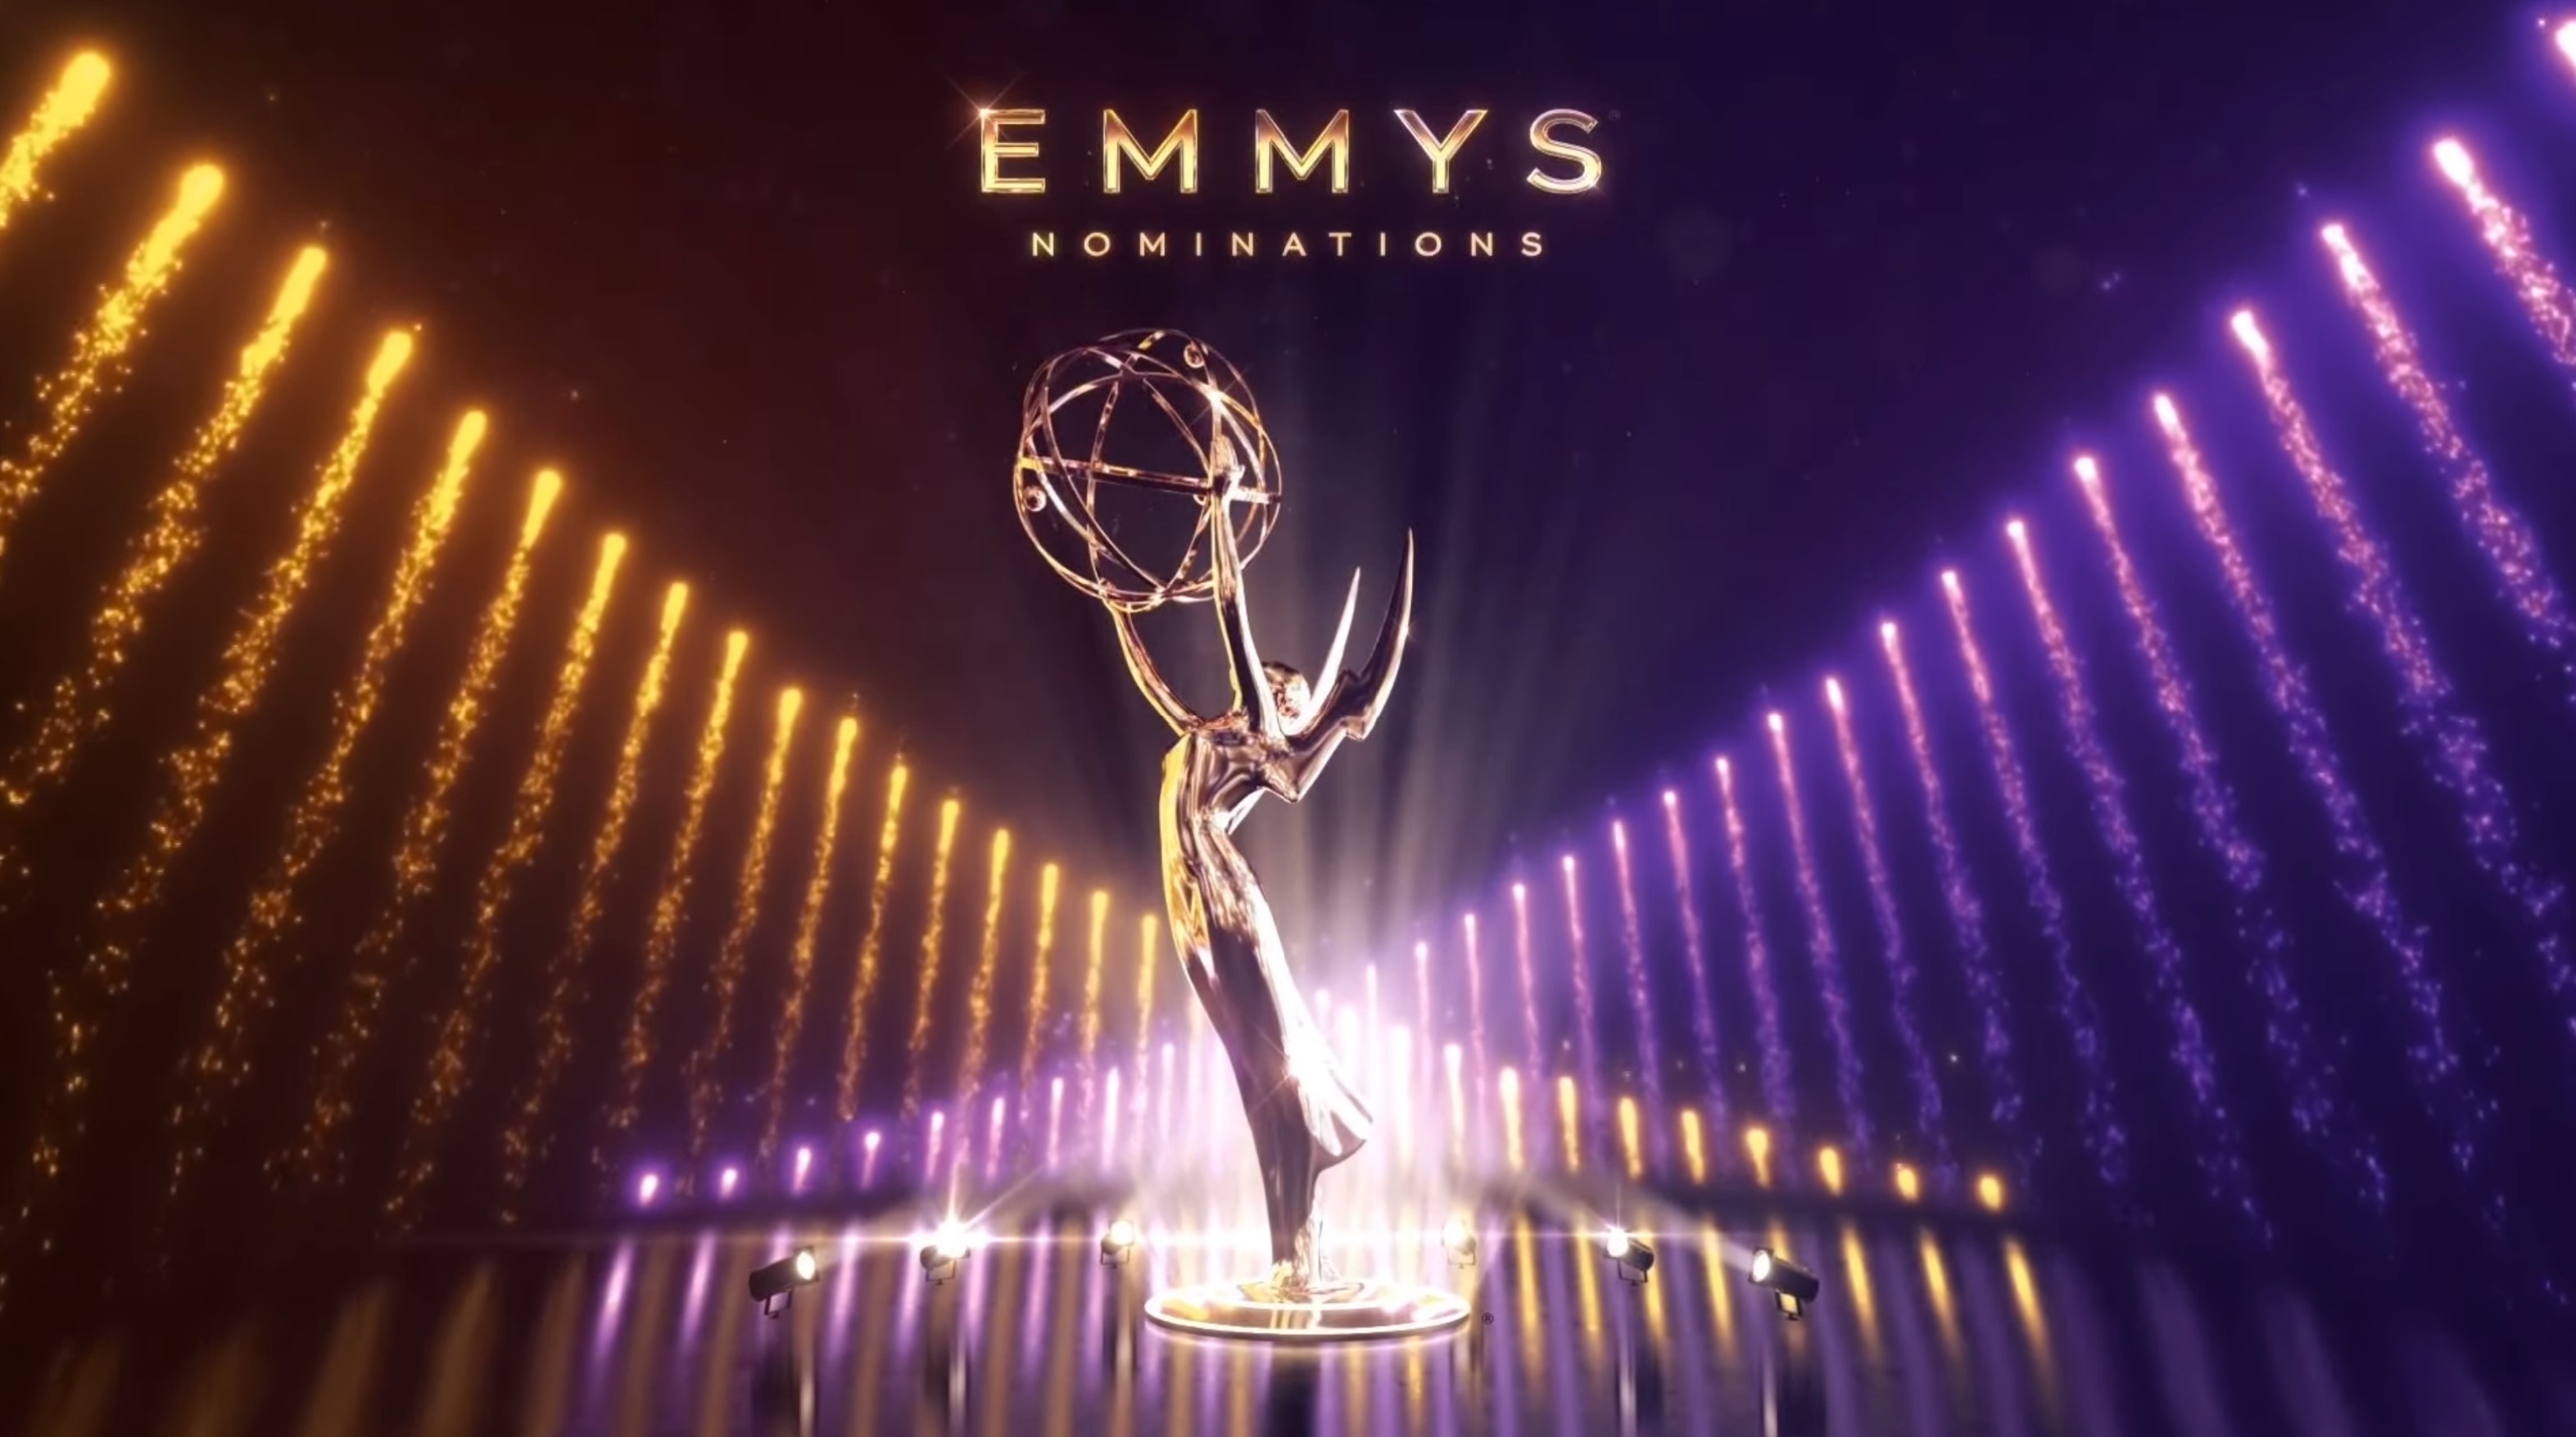 Game of Thrones' Scores Big At 71st Emmy Primetime Awards